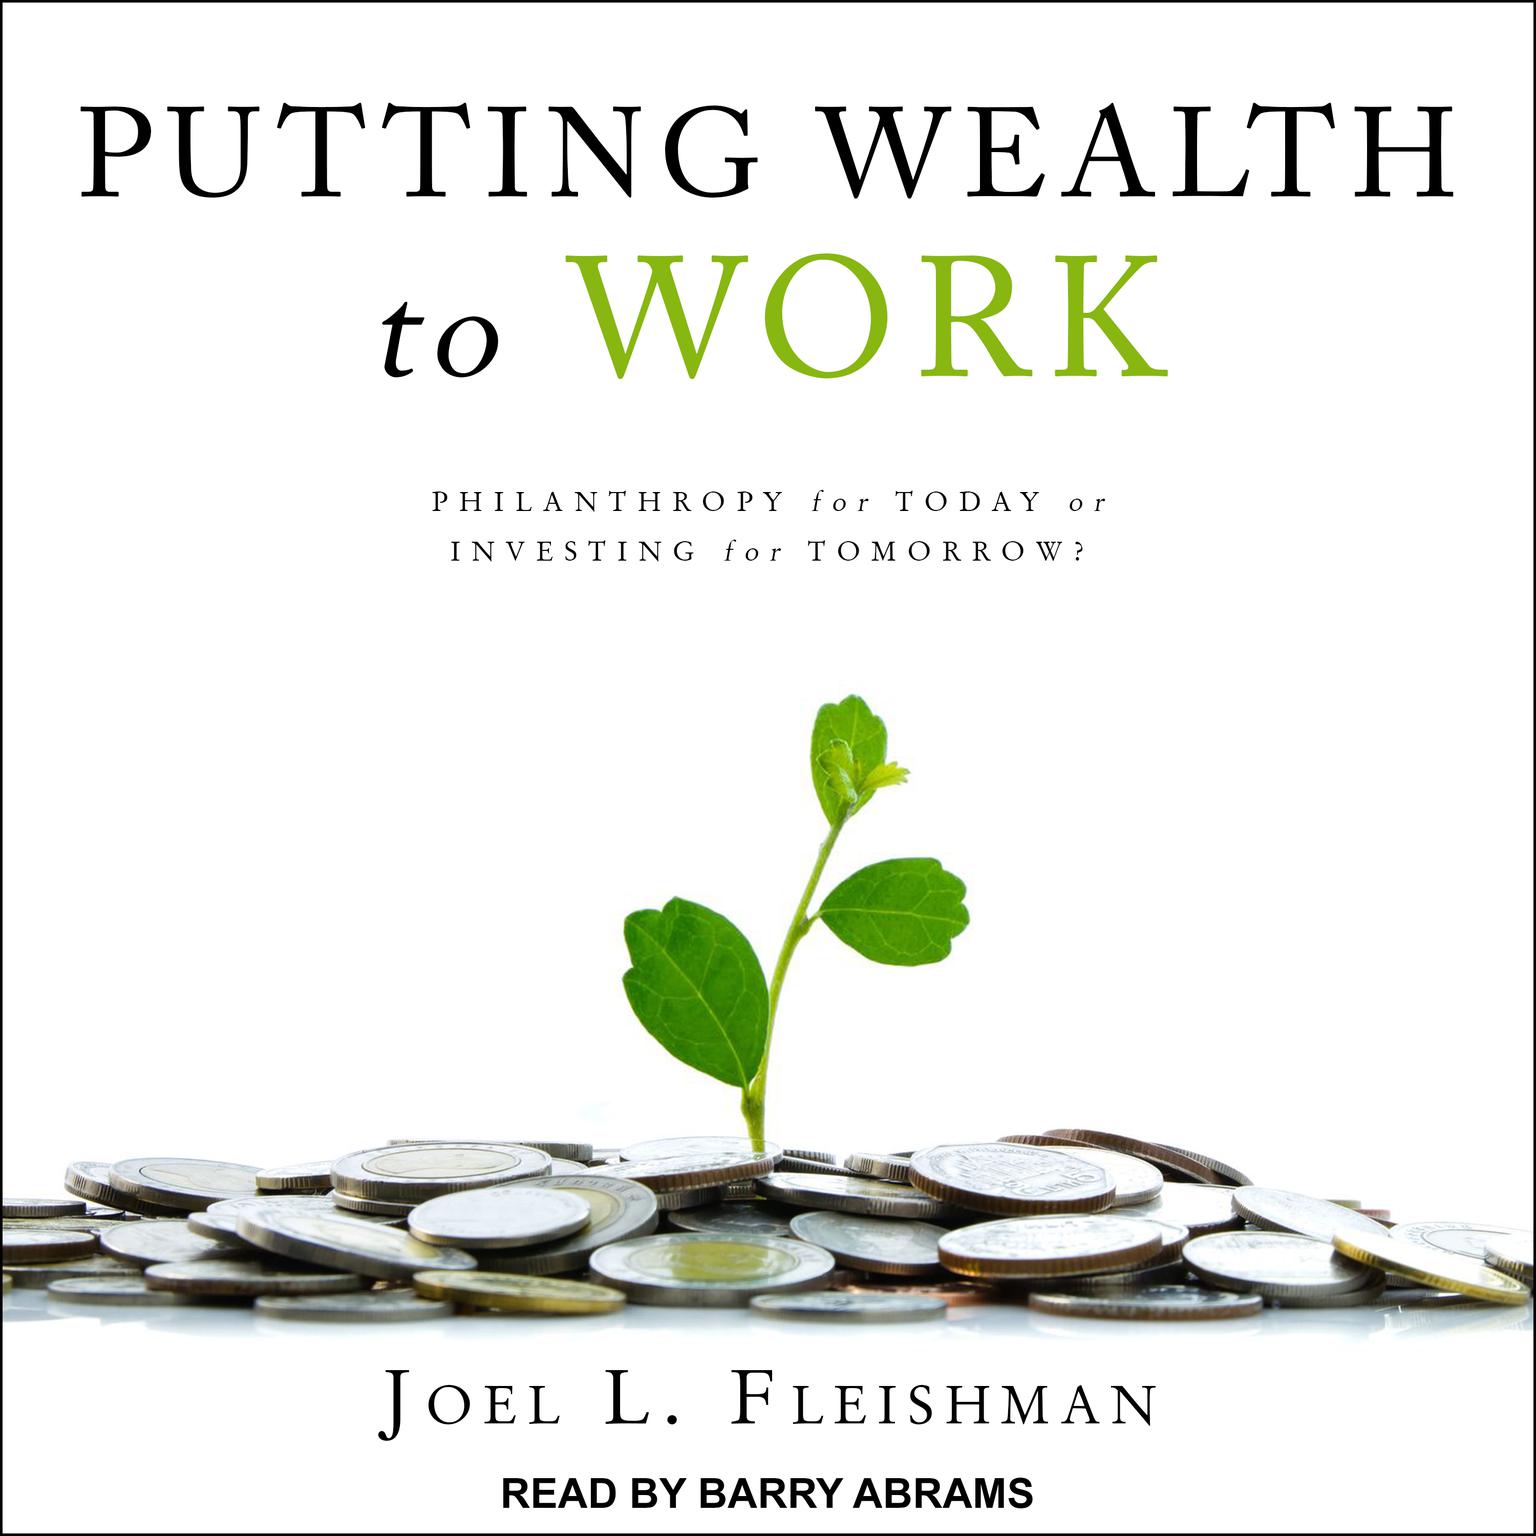 Putting Wealth to Work Audiobook by Joel L. Fleishman — Download Now